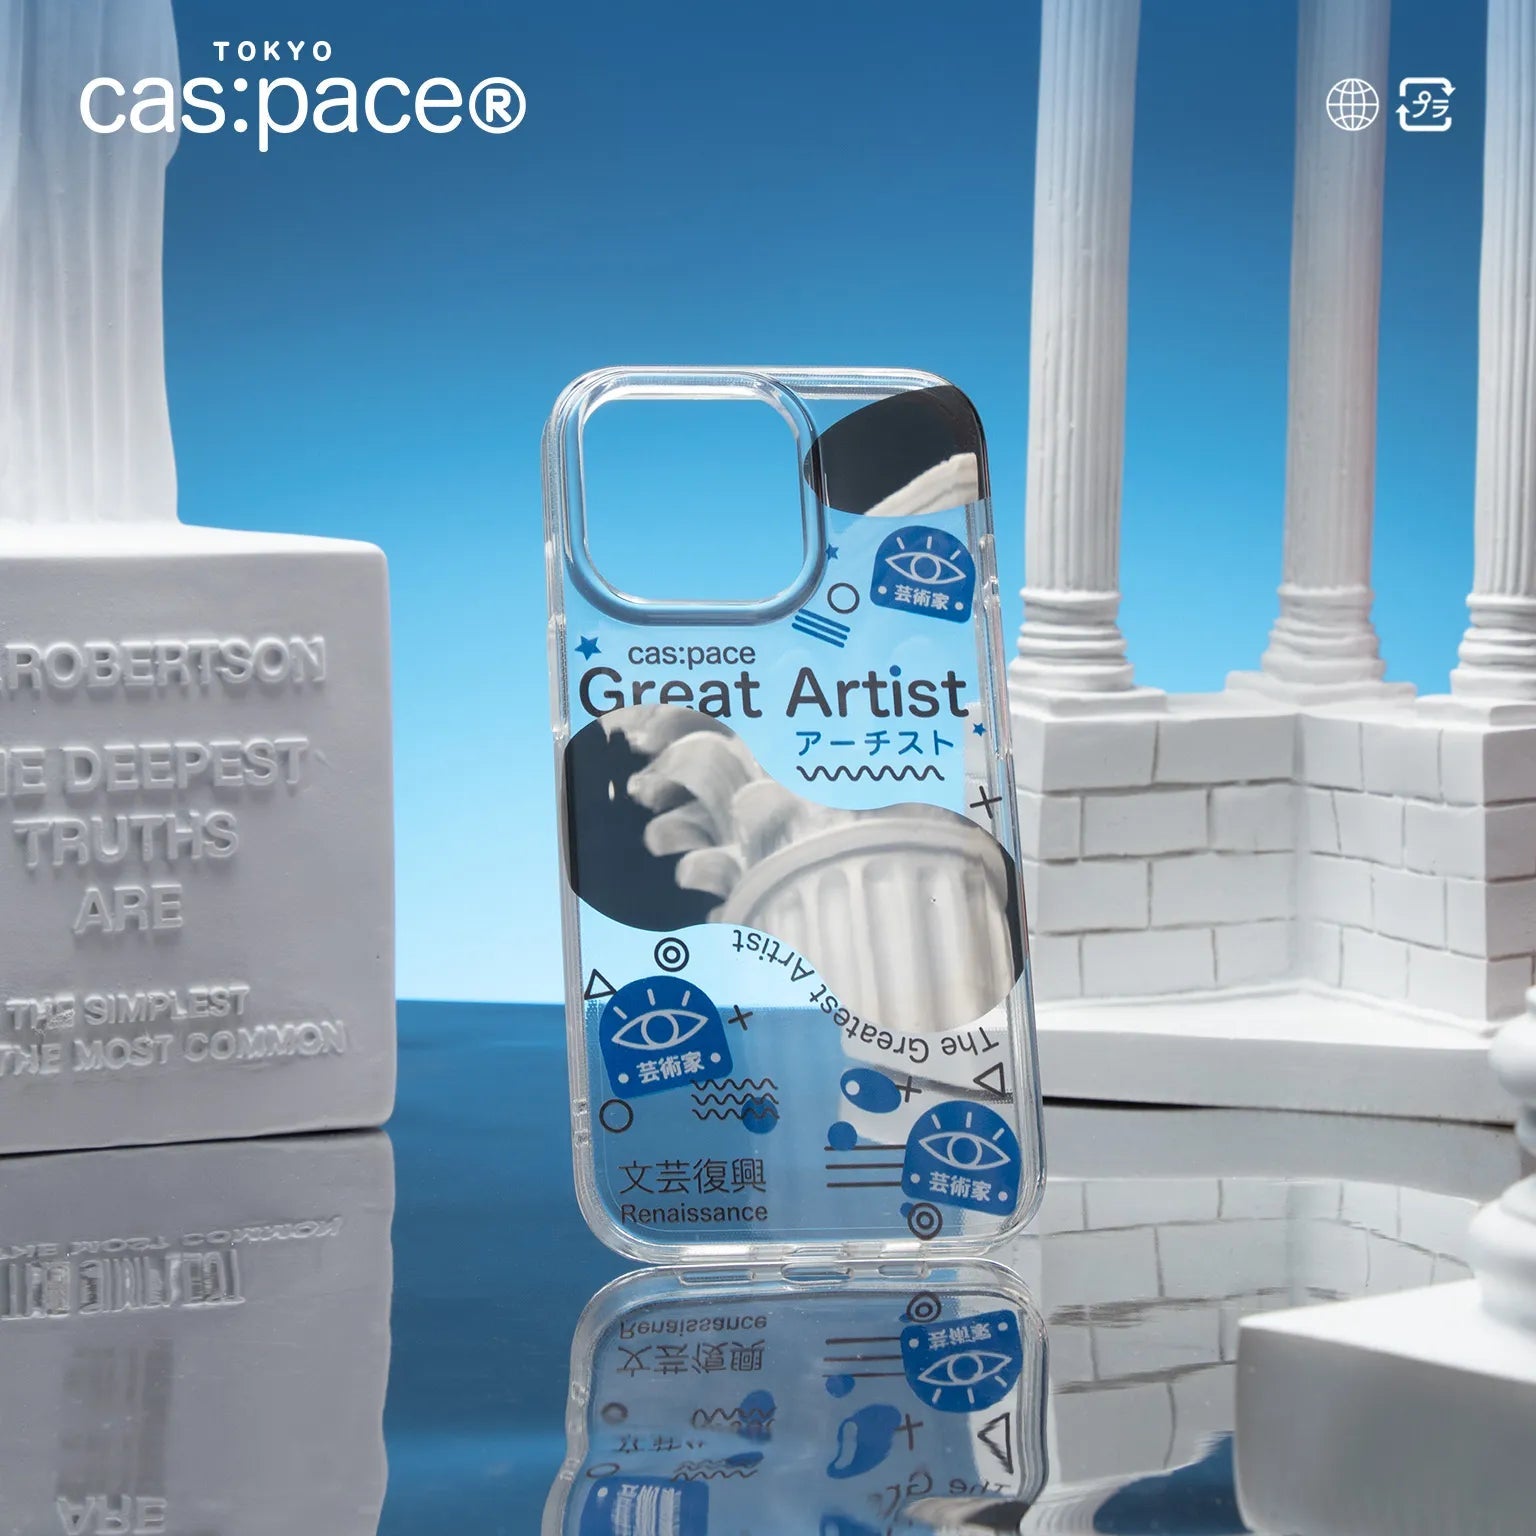 cas:pace 22S/S「アーチスト」携帯ケース - cas:pace 殼空間